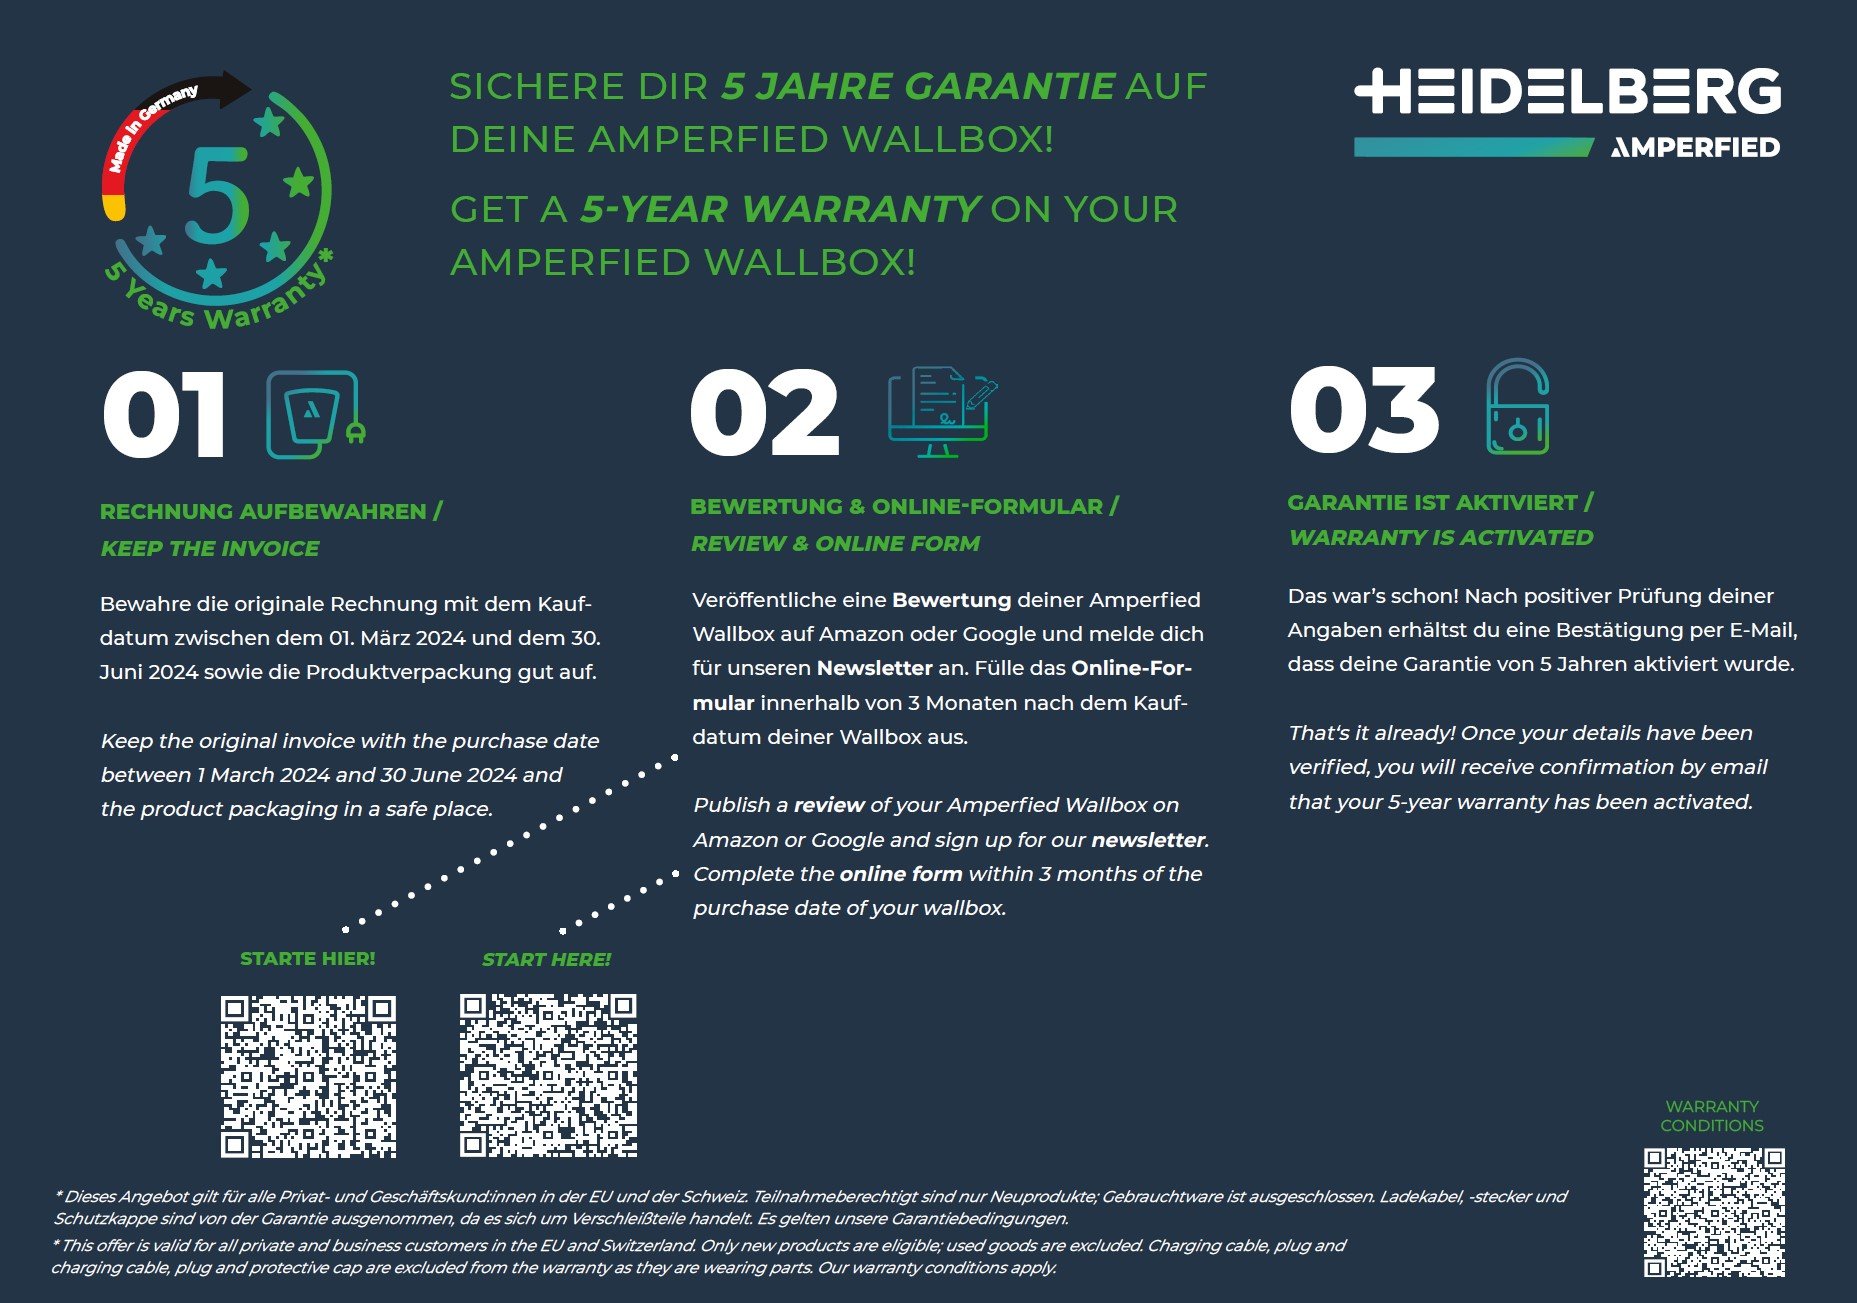 Heidelberg Amperfied Wallbox connect.business